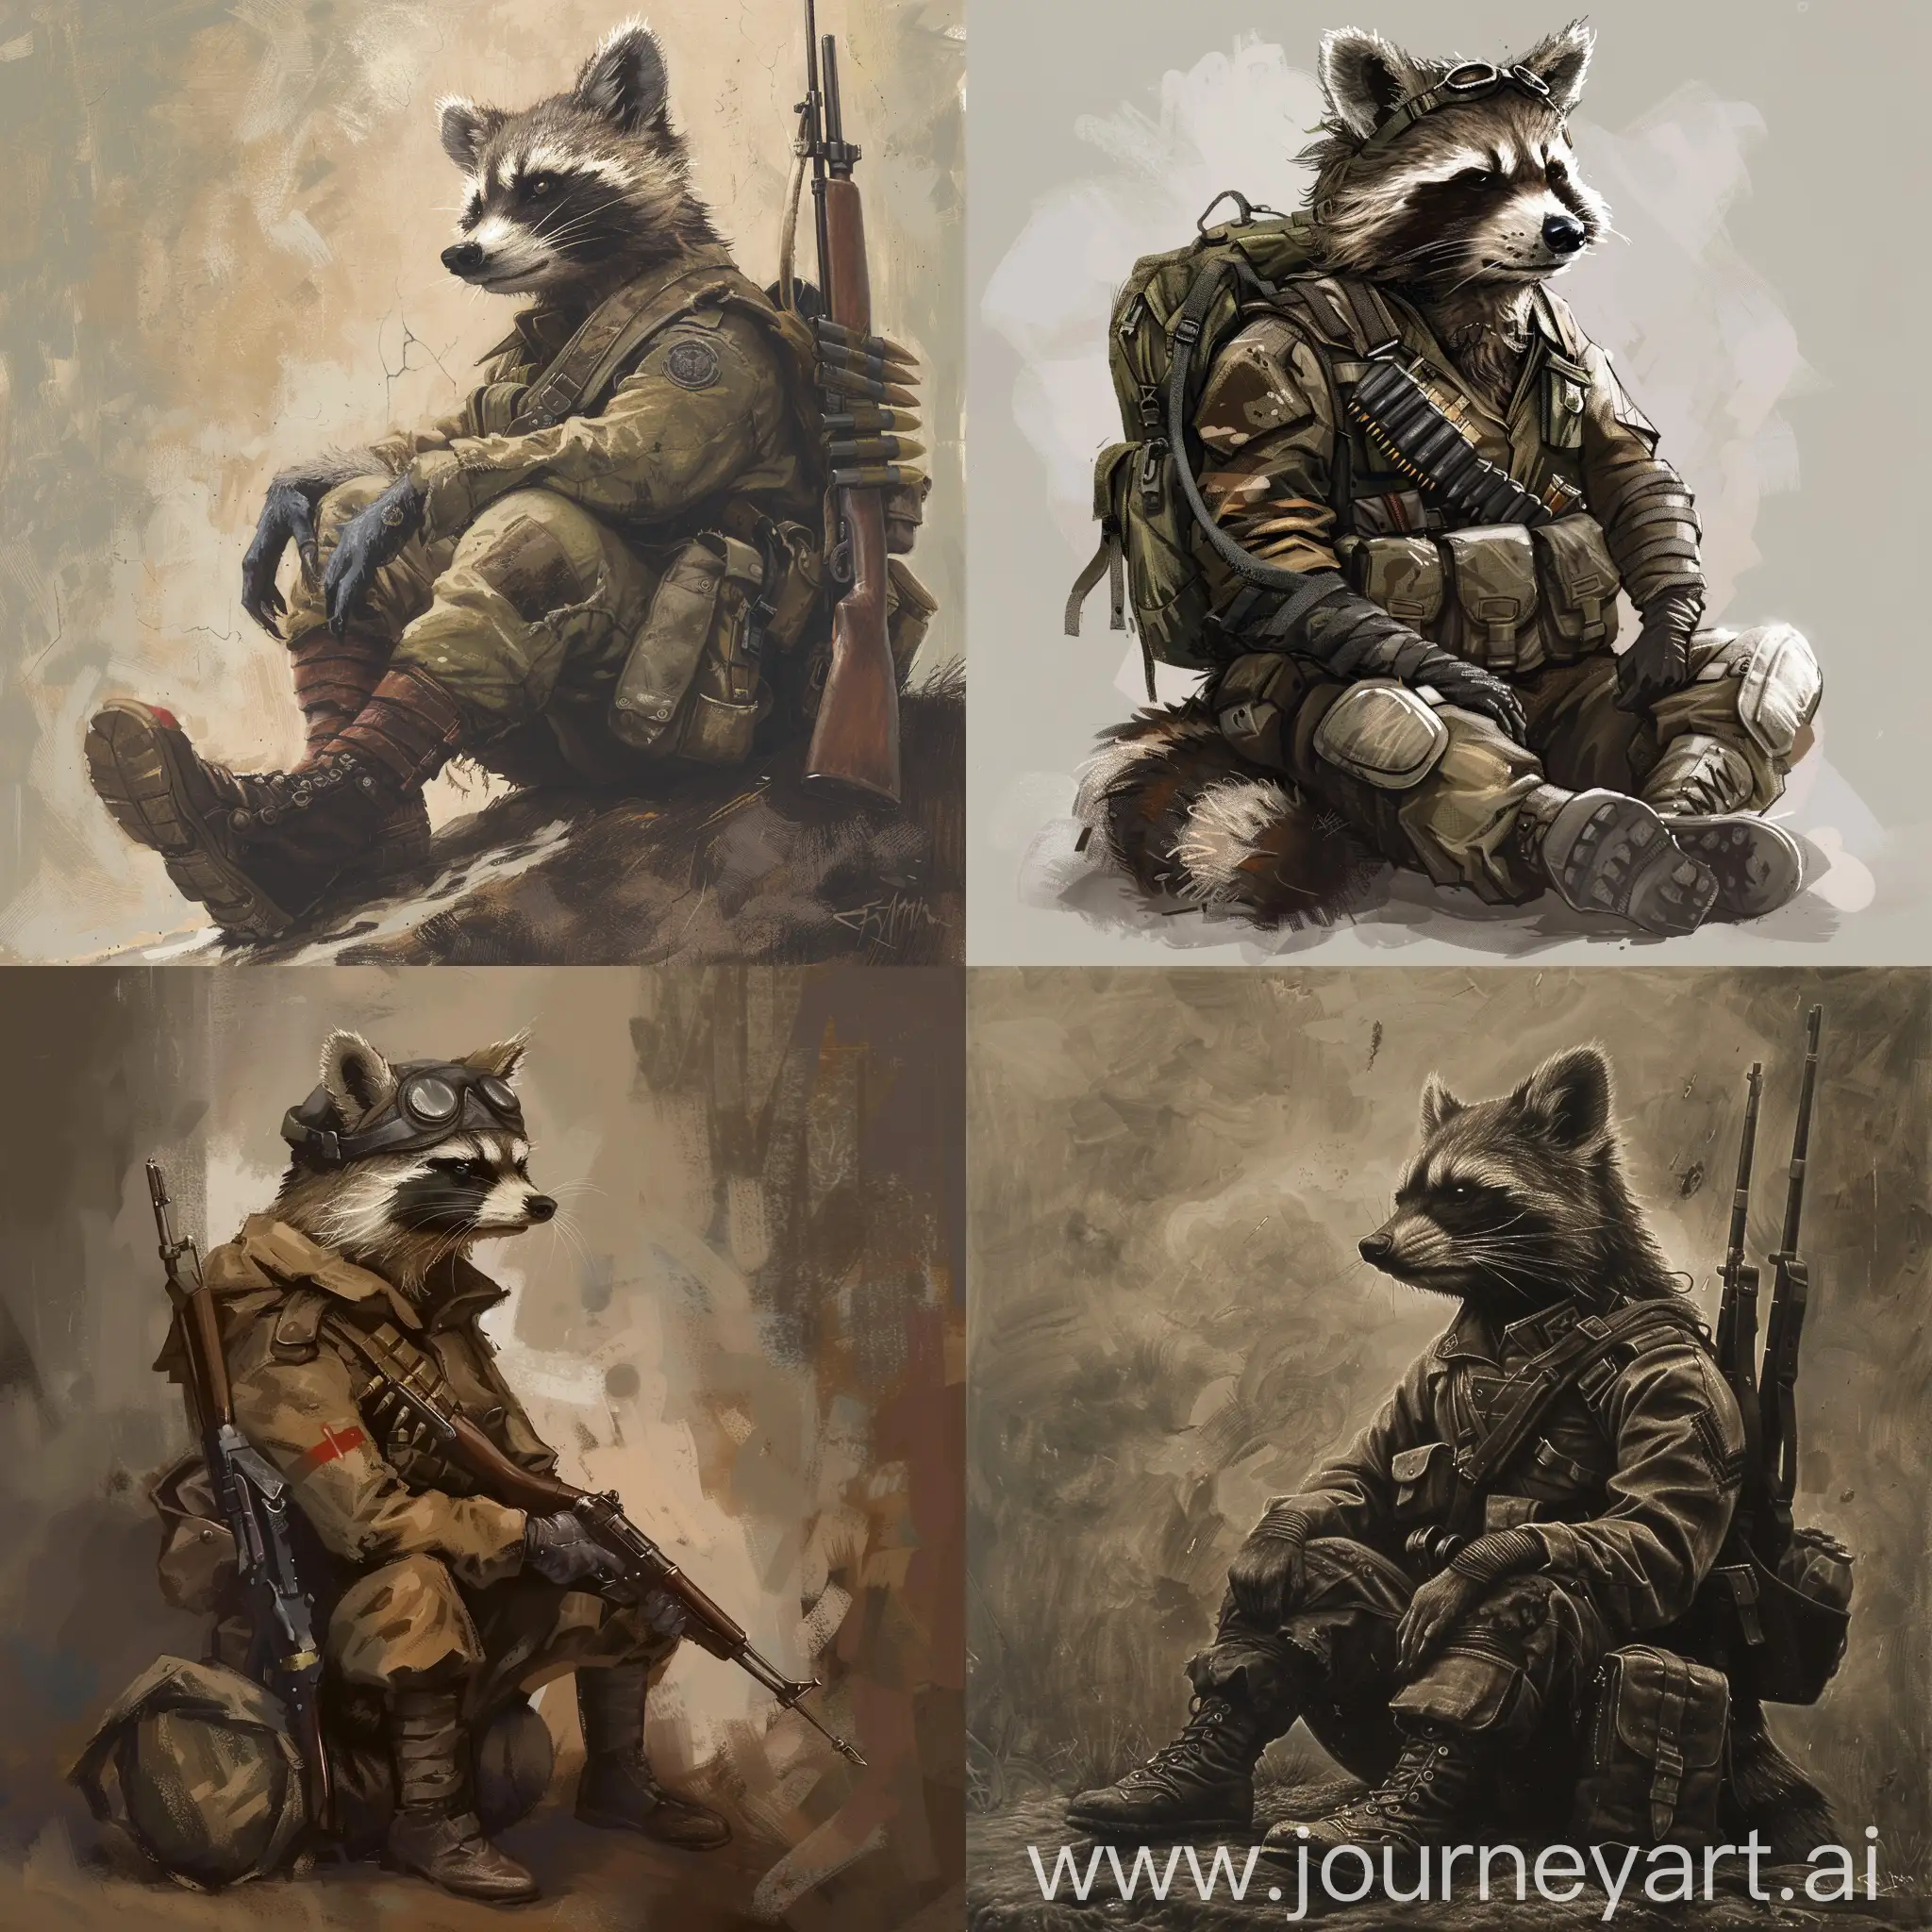 Raccoon-Warrior-Soldier-in-World-War-2-Setting